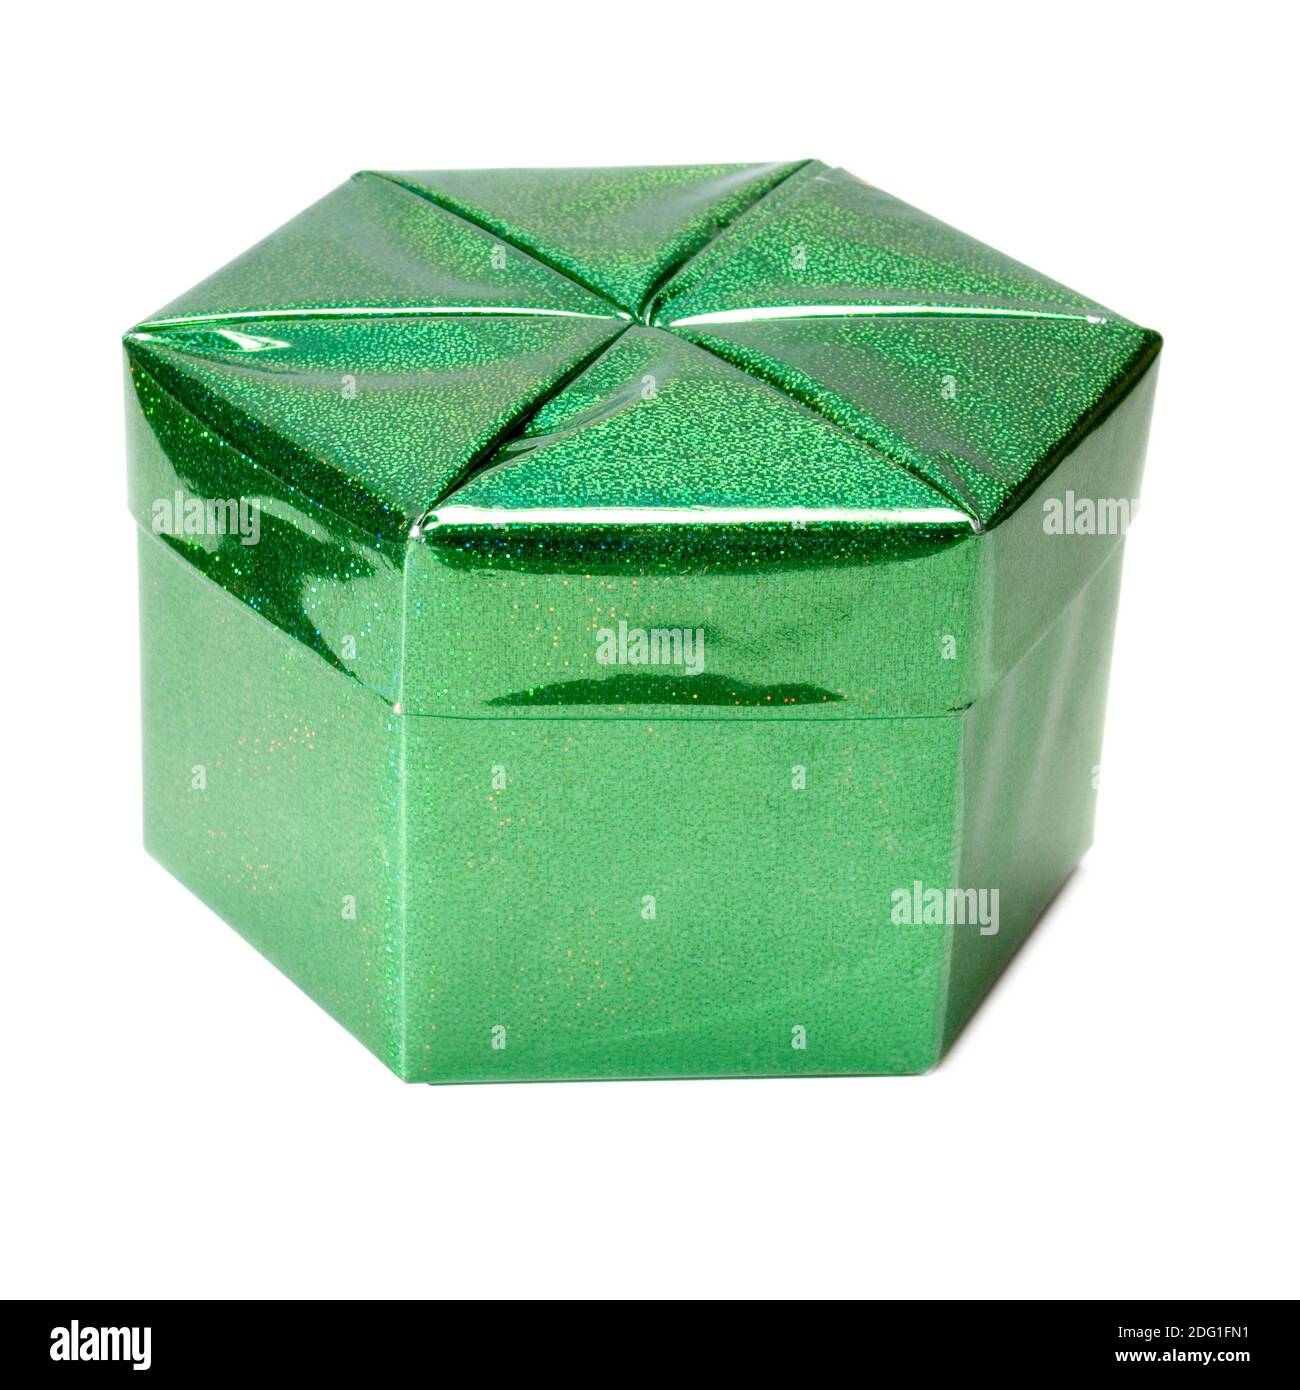 Green box isolated on white background. Stock Photo